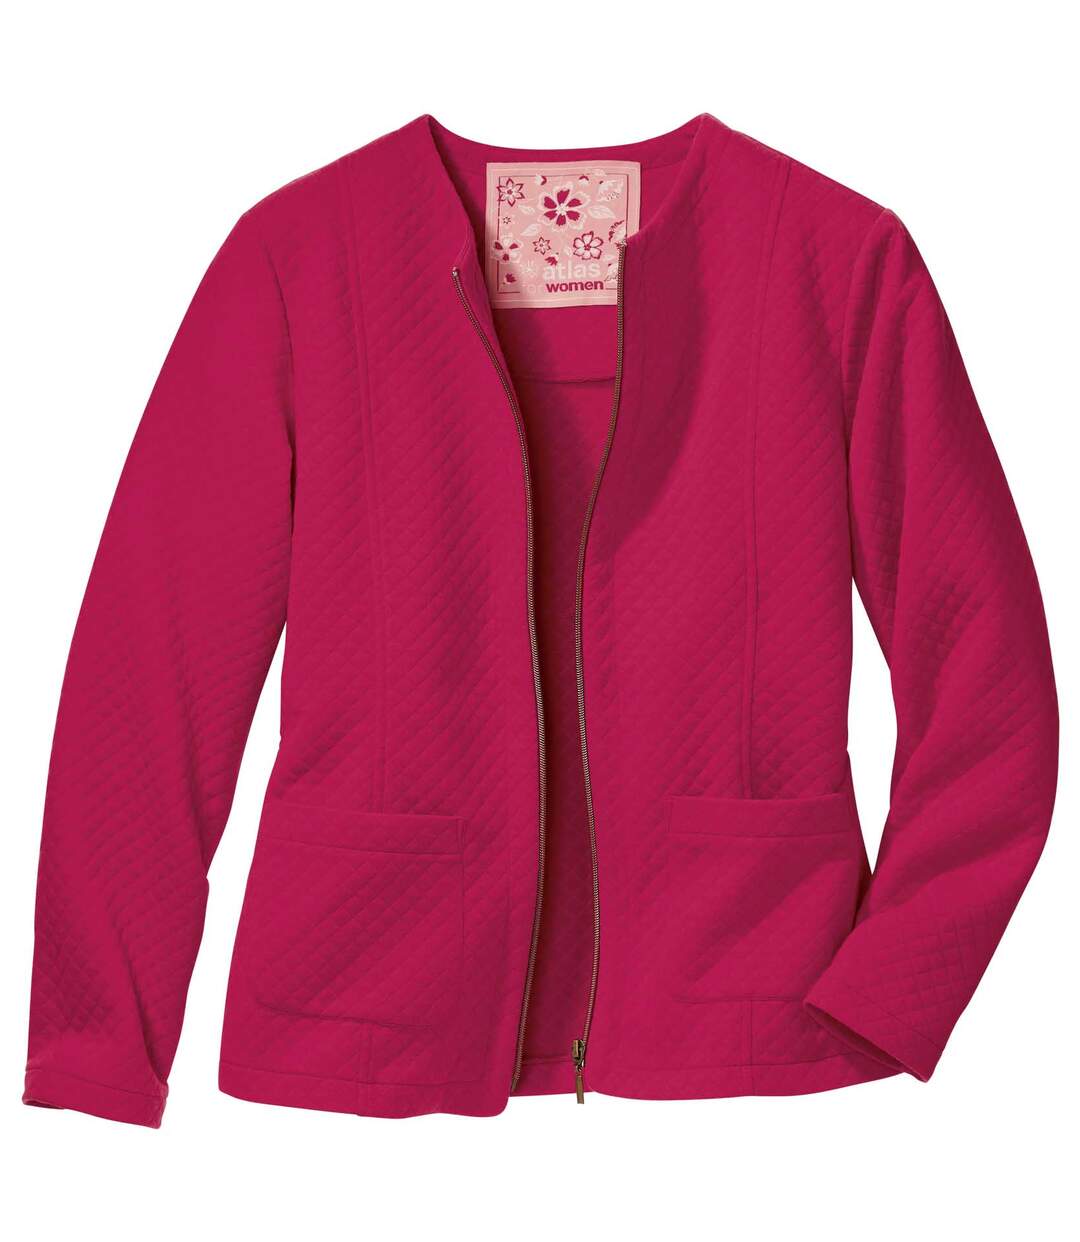 Women's Spring Fleece Jacket - Cherry Atlas For Men